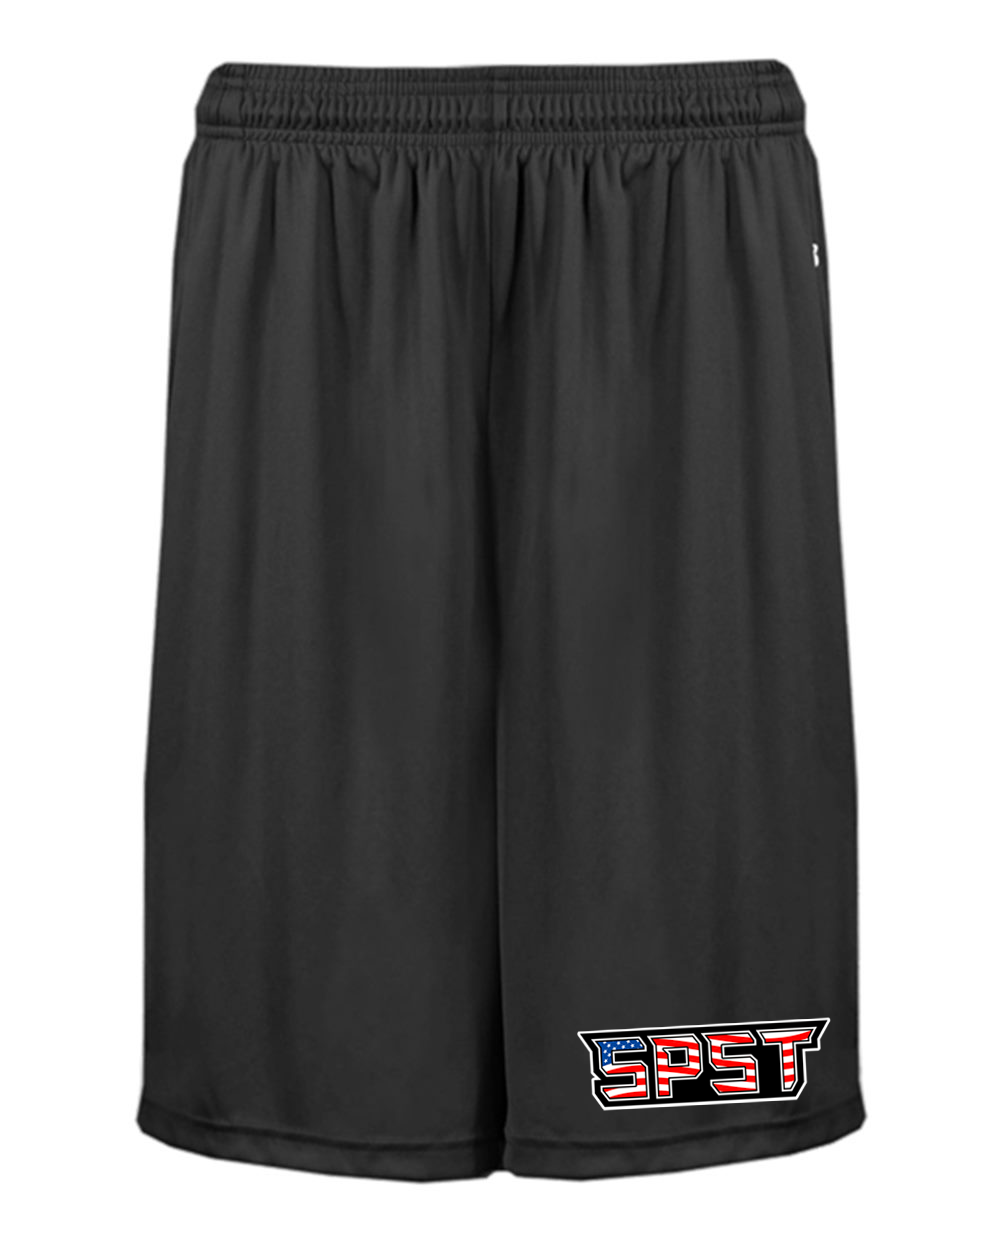 SPST Pocketed 7" Shorts - 4127